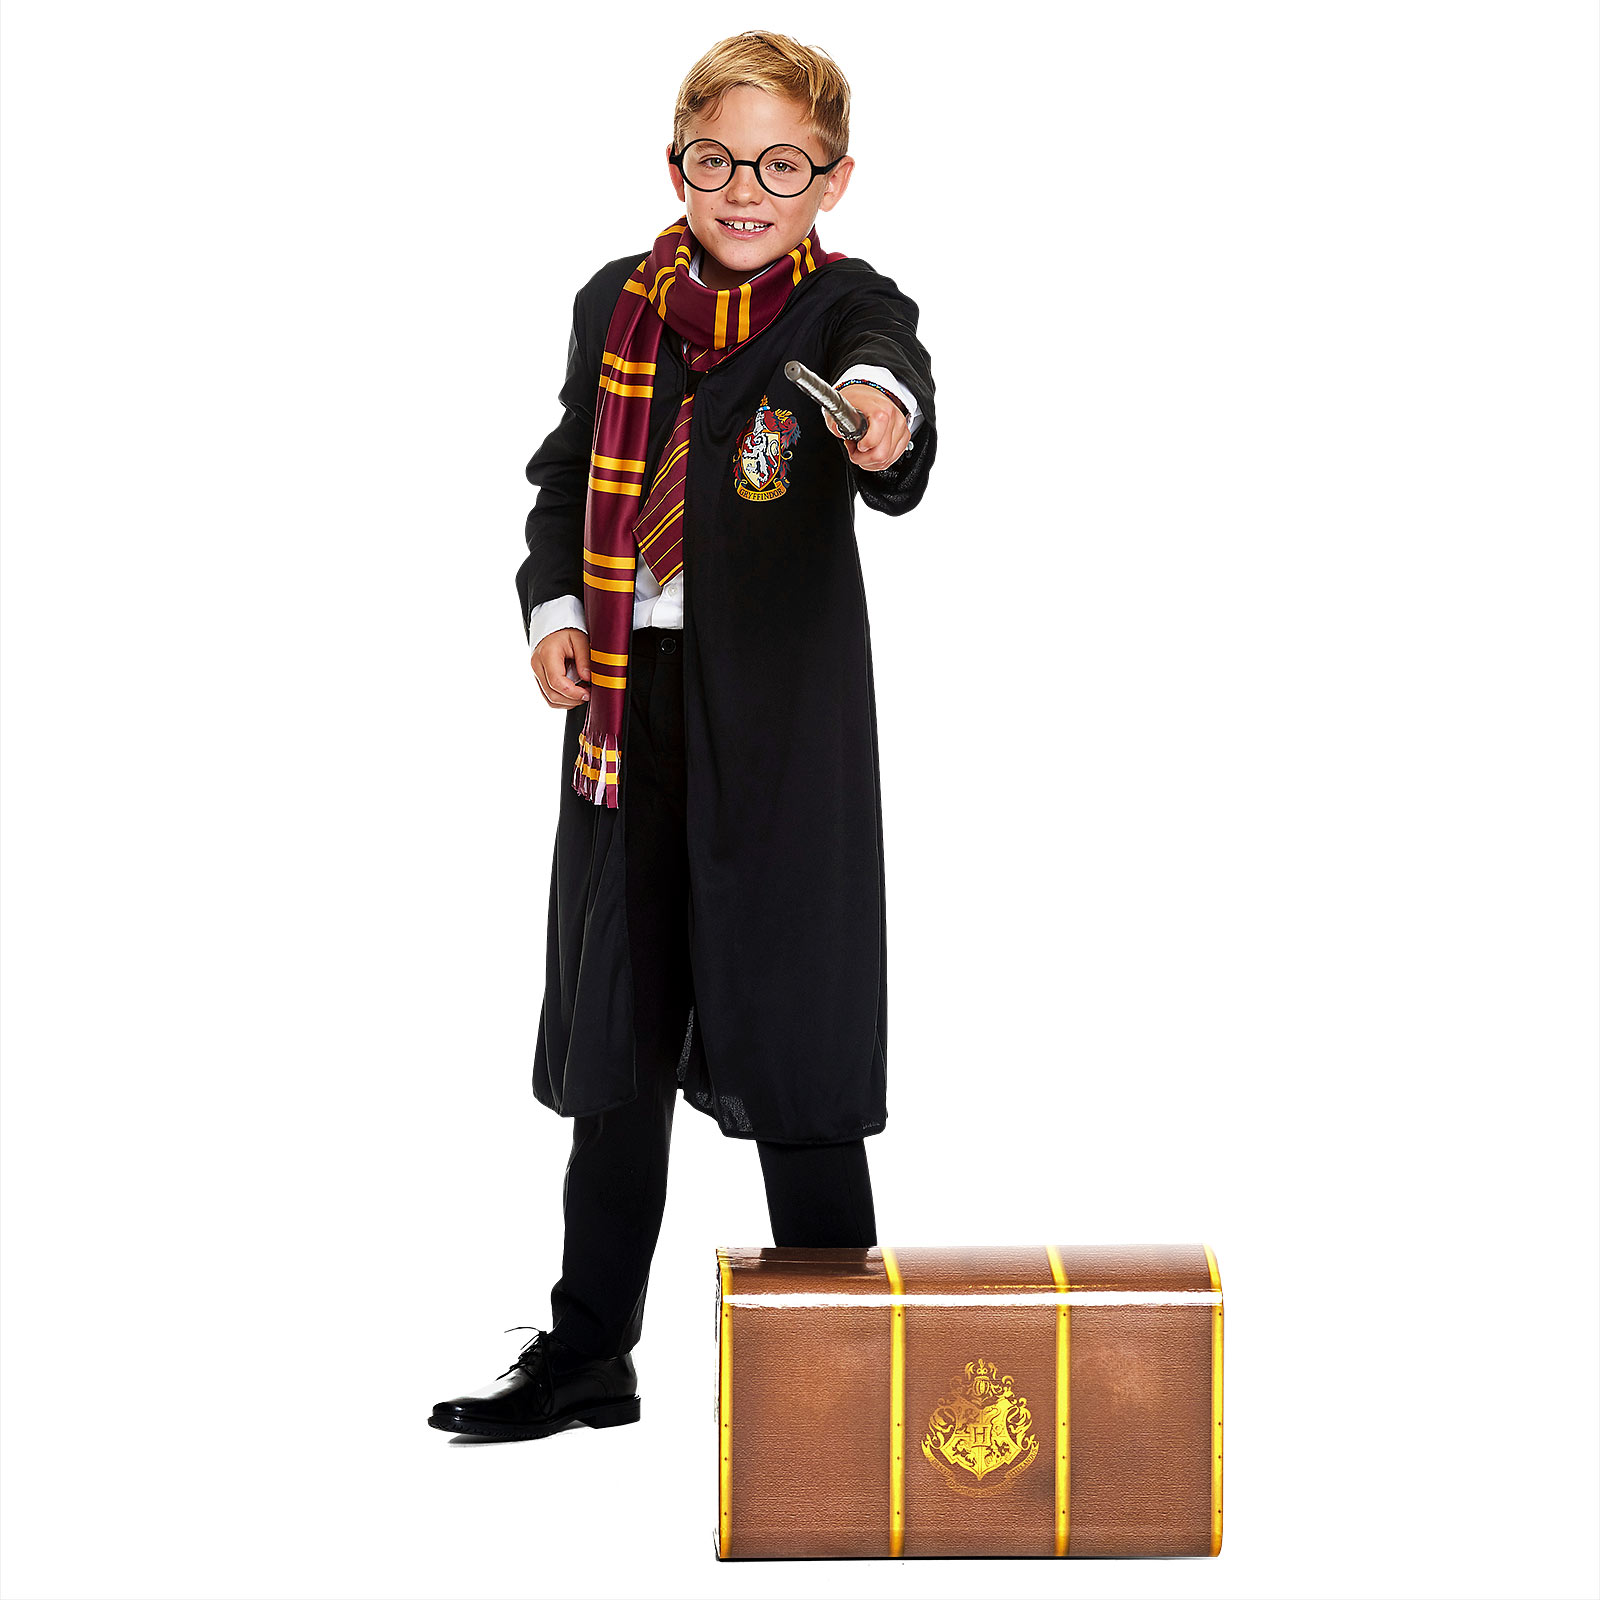 Harry Potter - Kinderkostuumset in koffertje